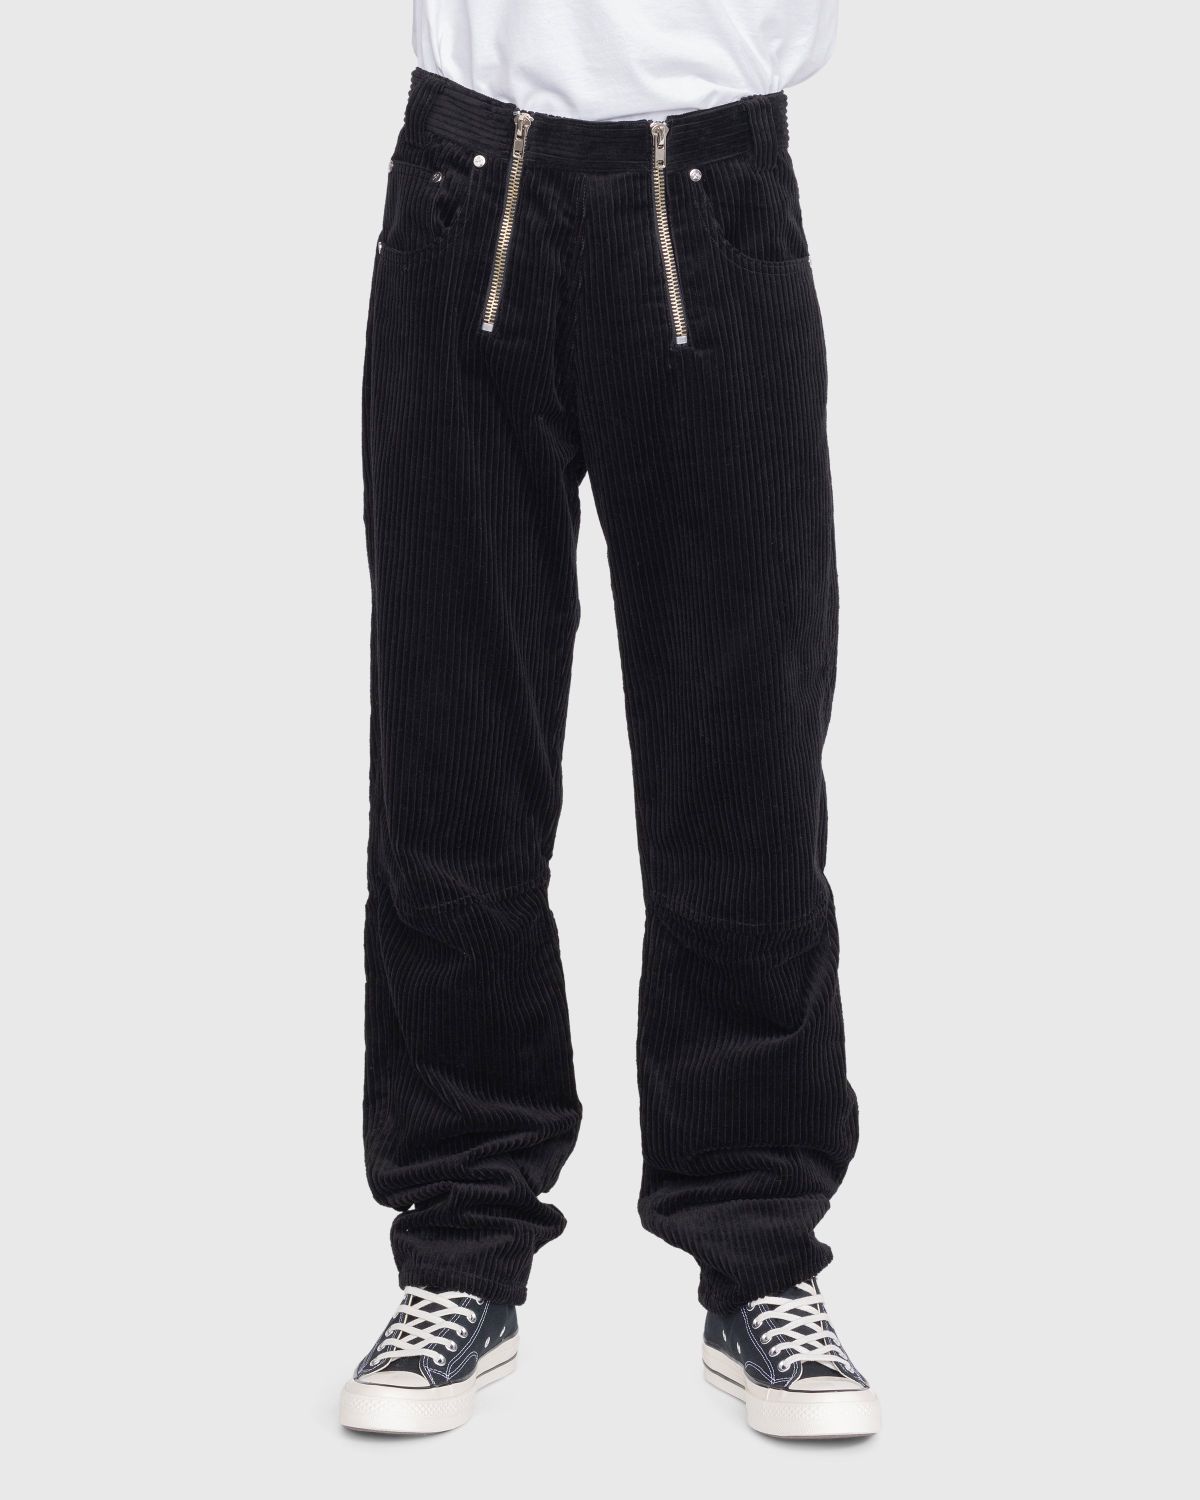 GmbH – Bekir Cargo Trousers With Double Zips Black Corduroy - Pants - Black - Image 2